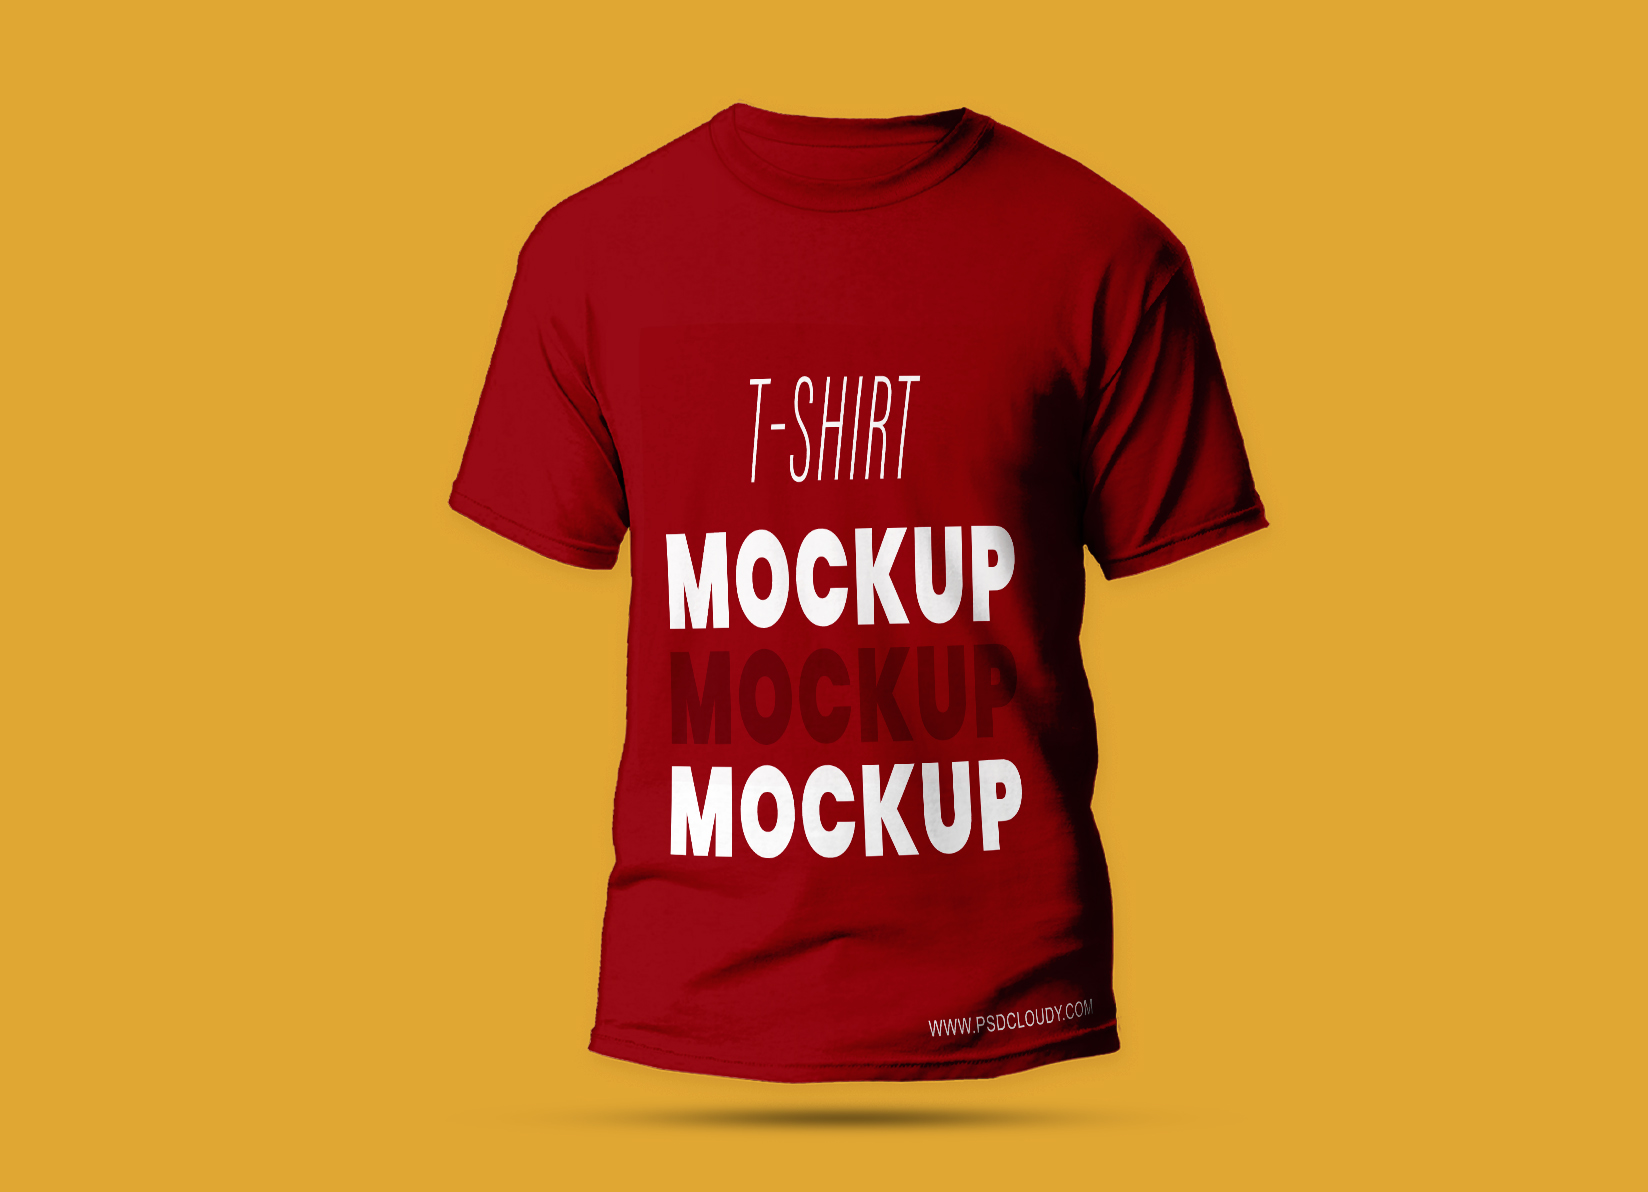 T-Shirt Mockup PSD Free Download 1